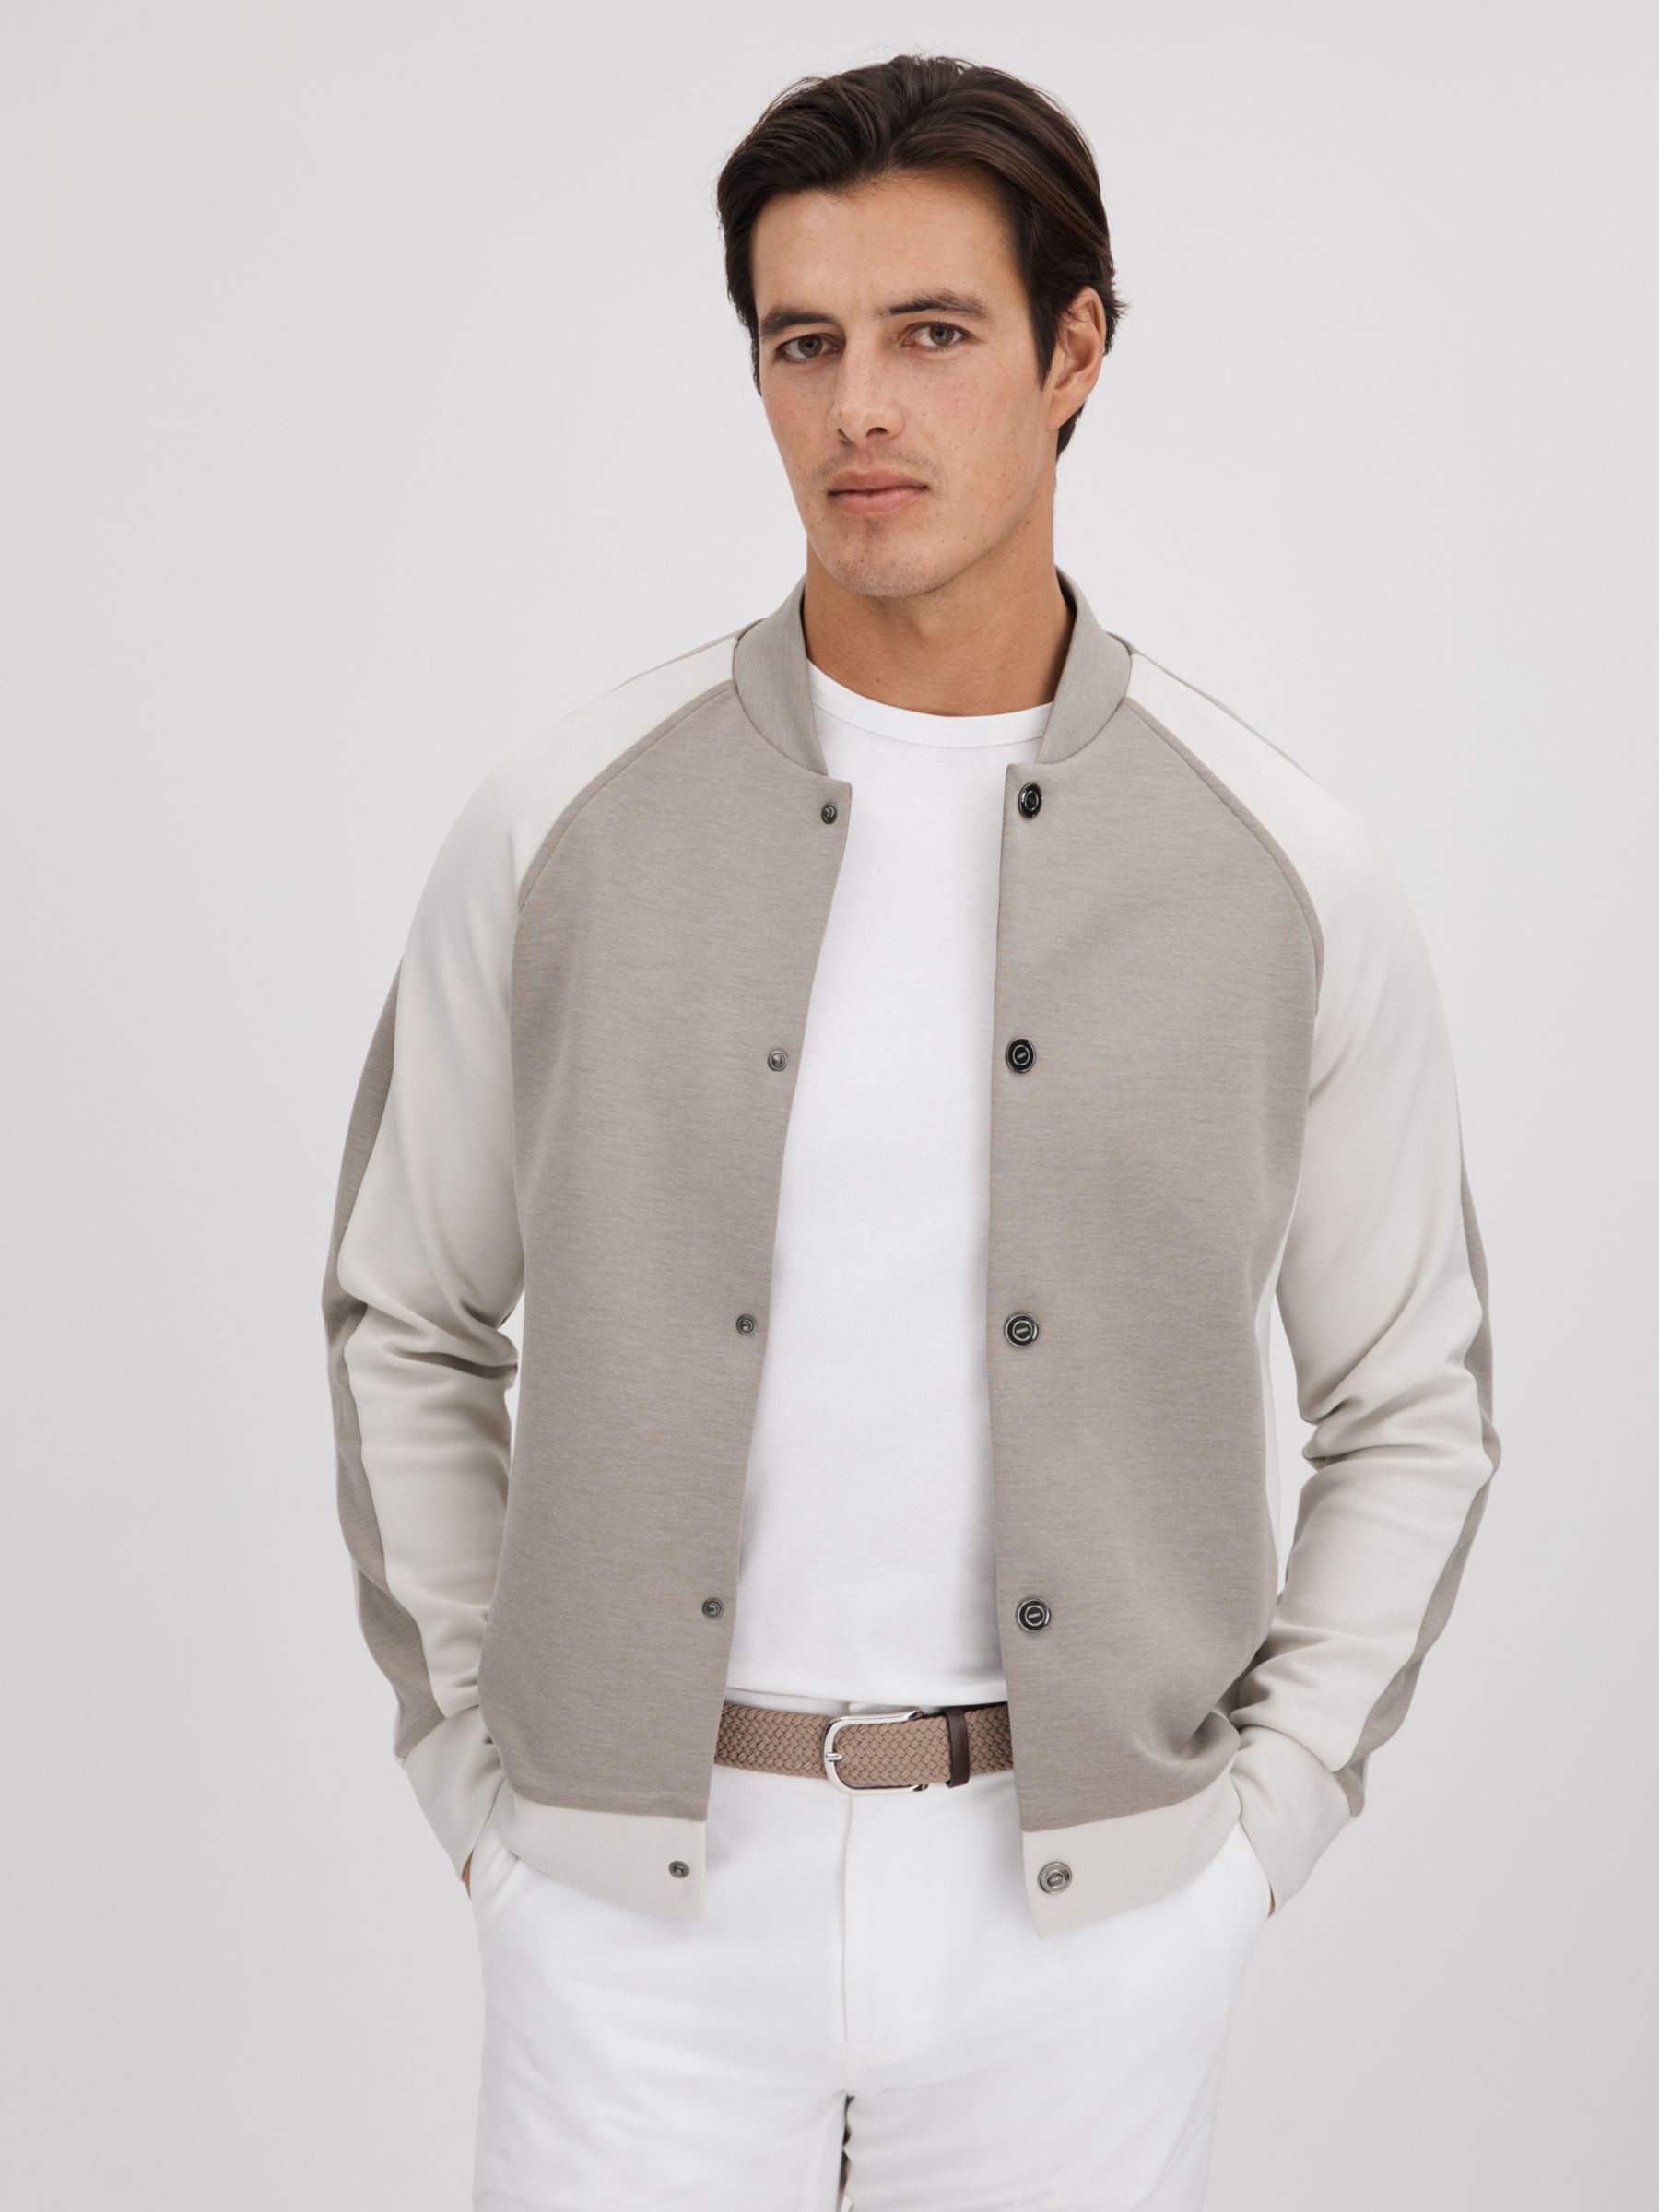 Reiss Pelham Long Sleeve Colour Block Jacket, Taupe/White, XL